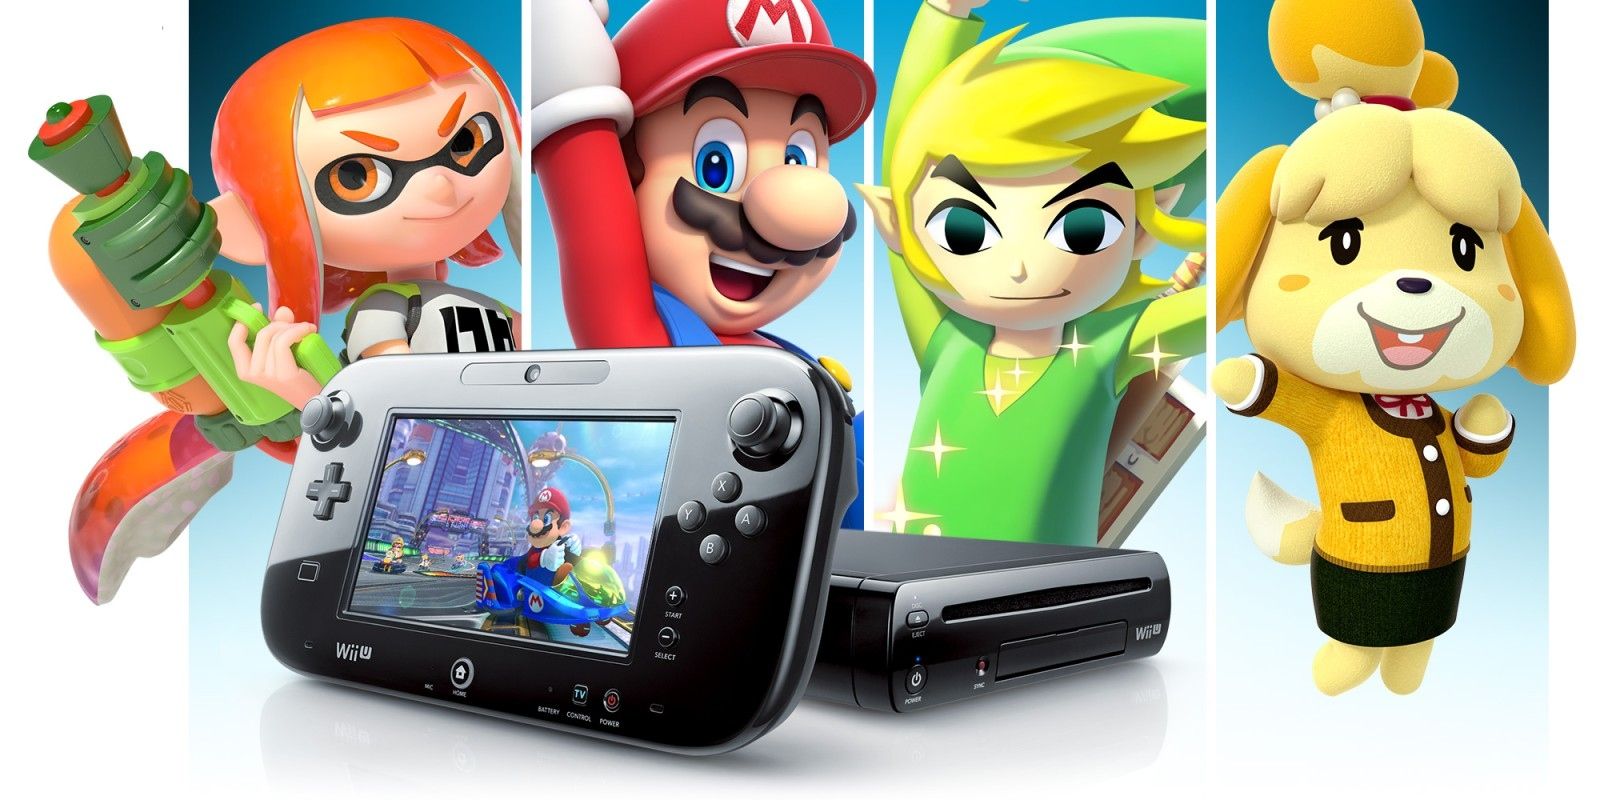 Nintendo Wii U Worth Buying In 2020